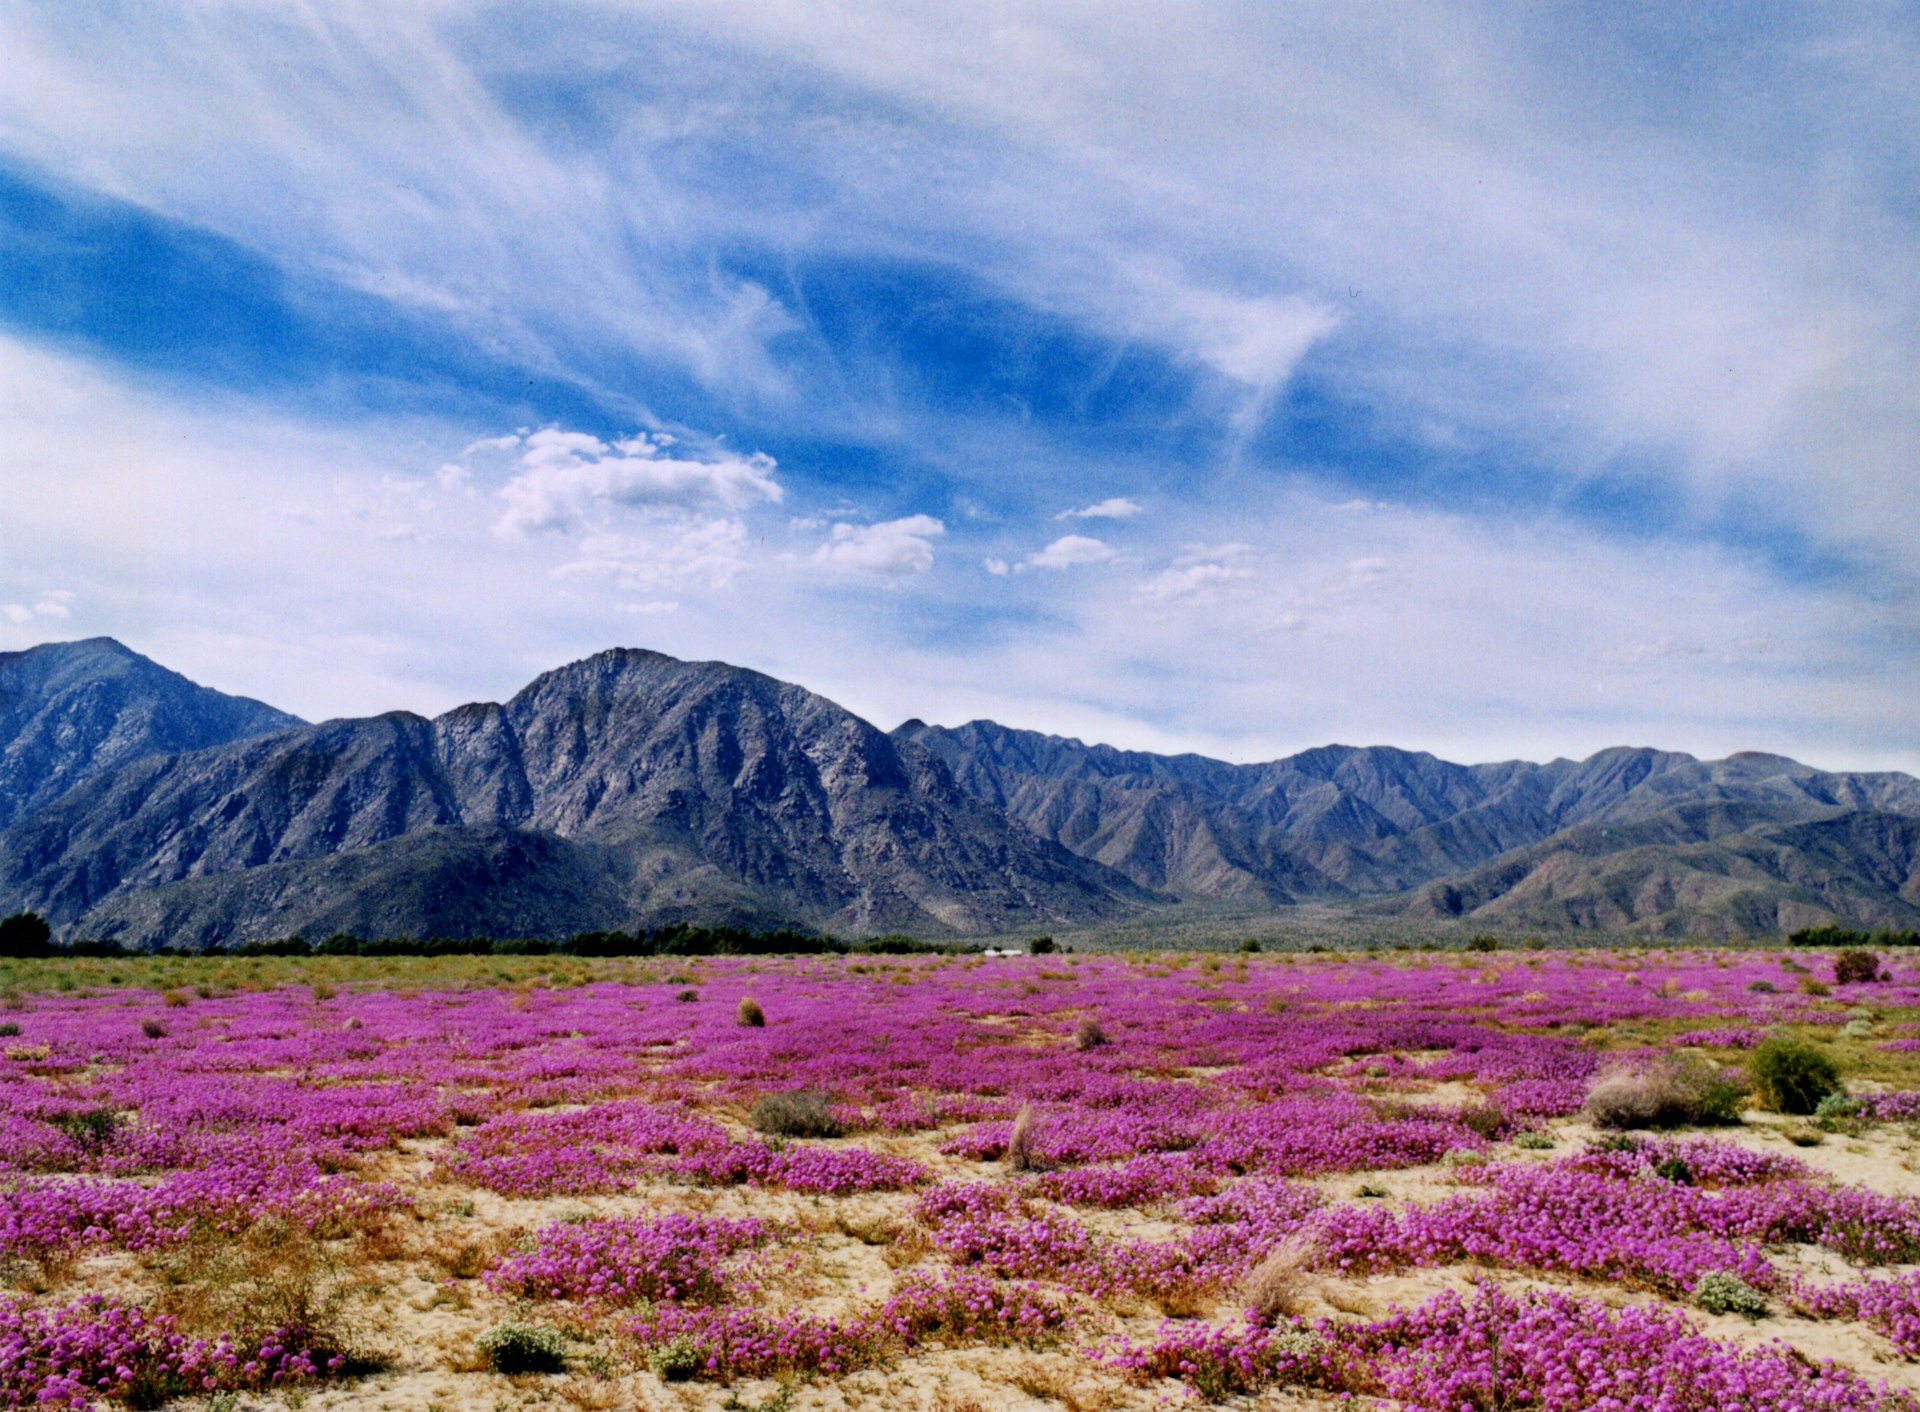 Spring wildflowers in the desert at Anza Borrego Desert State Park, California